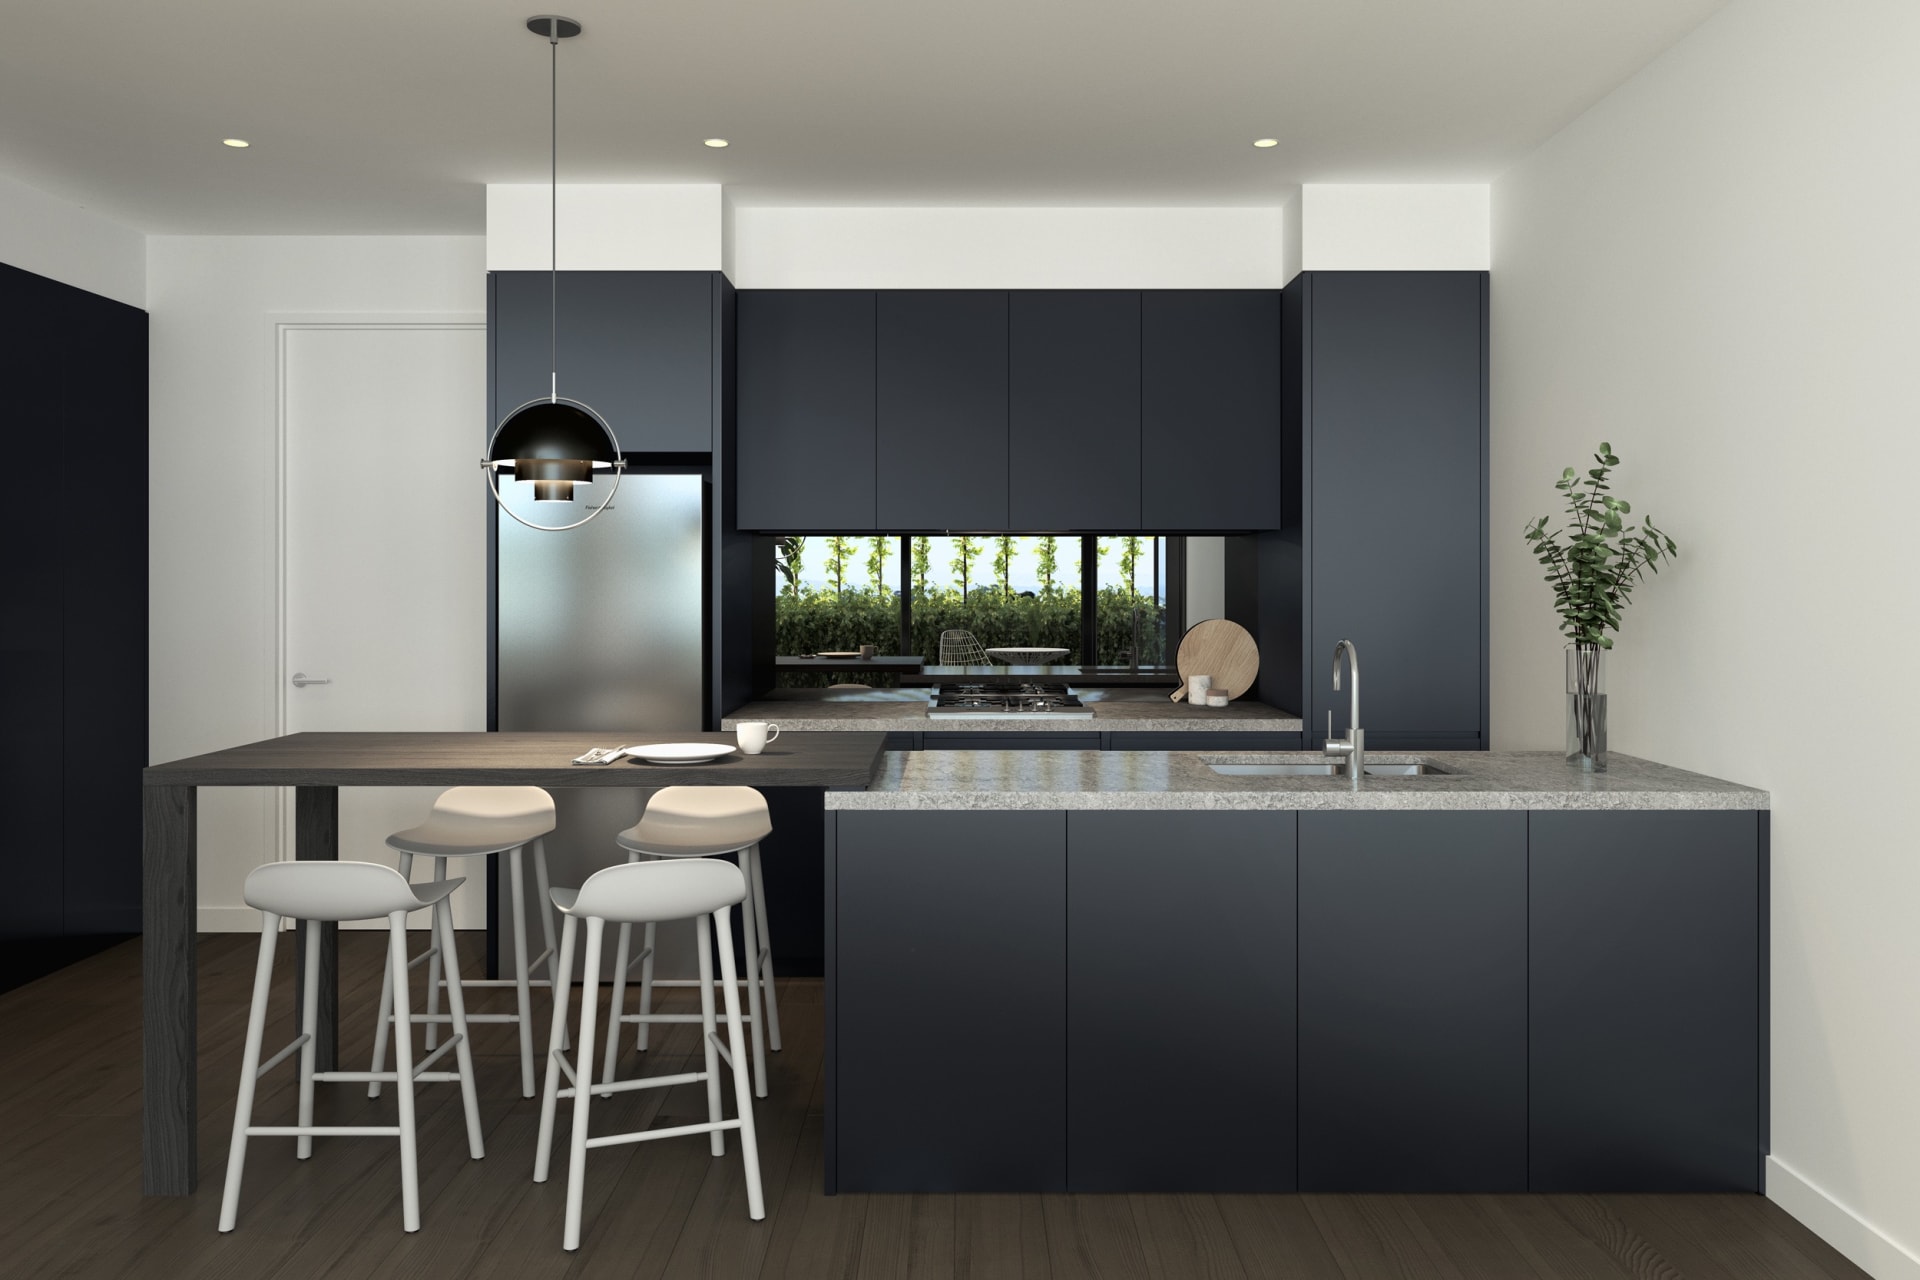 Design details: The interior decisions by Adele Bates at Melbourne’s Pace of Blackburn apartment development